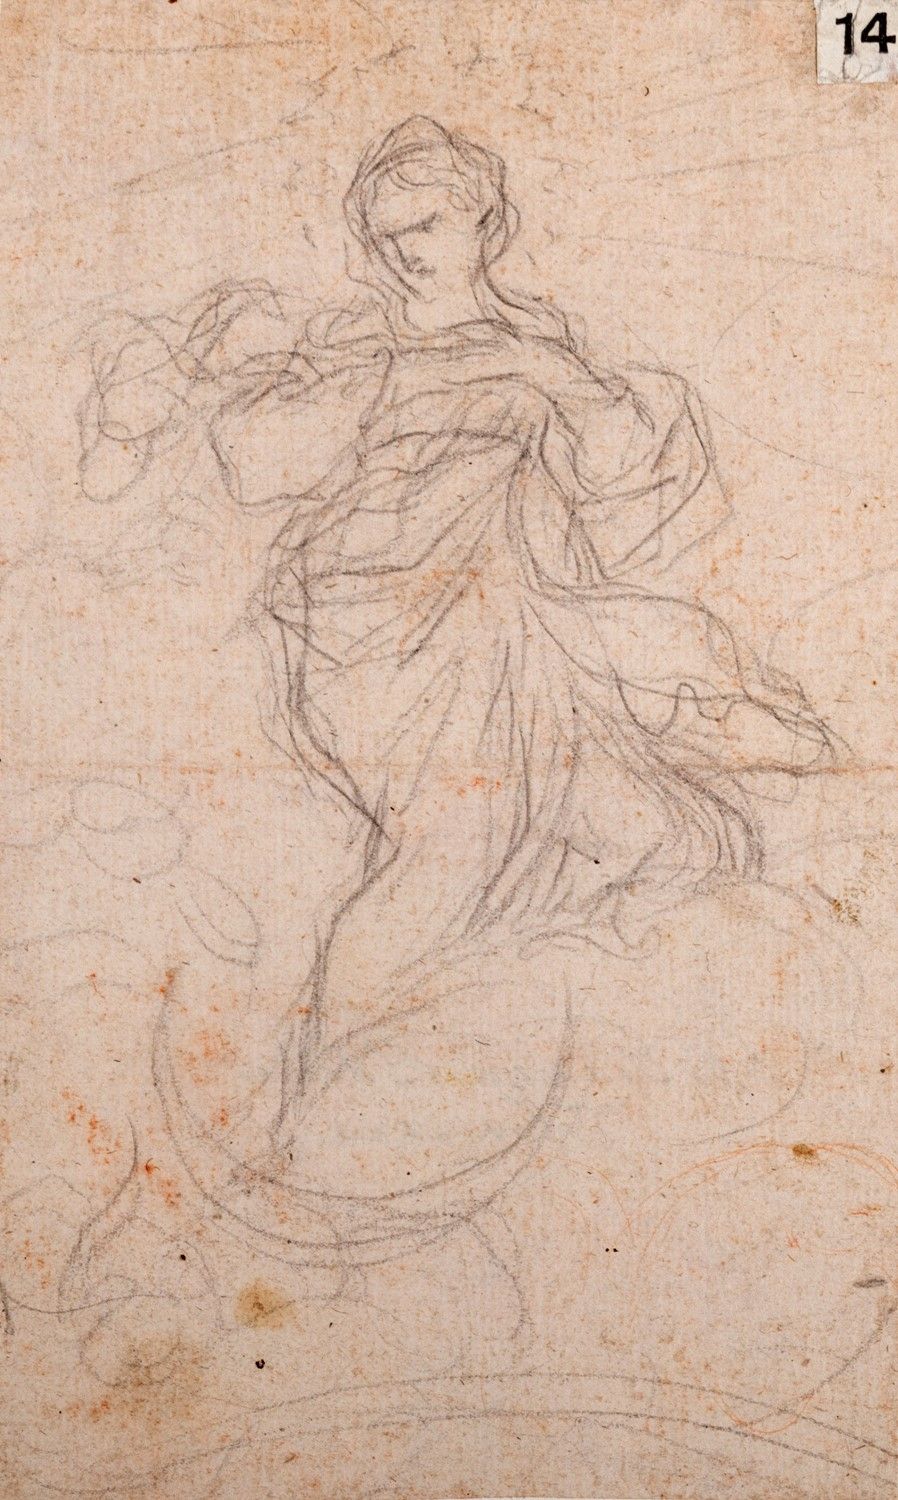 Pietro Paolo Baldini 圣母无原罪

黑色铅笔在纸上铺设，
204 x 129 mm
 

背面的铭文：Baldini

 





 

&hellip;